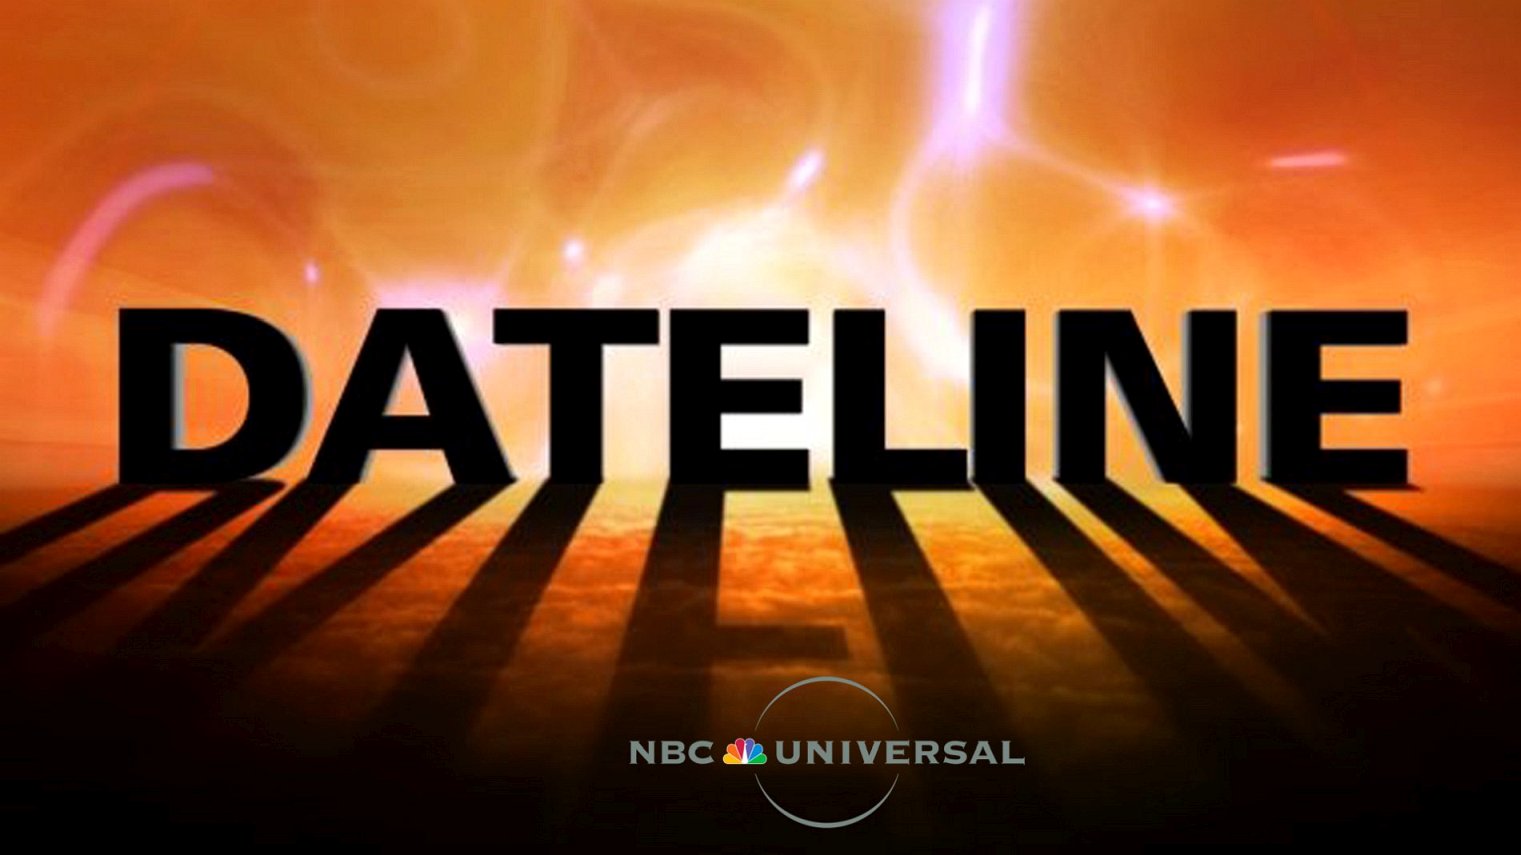 cast of Dateline NBC season 25